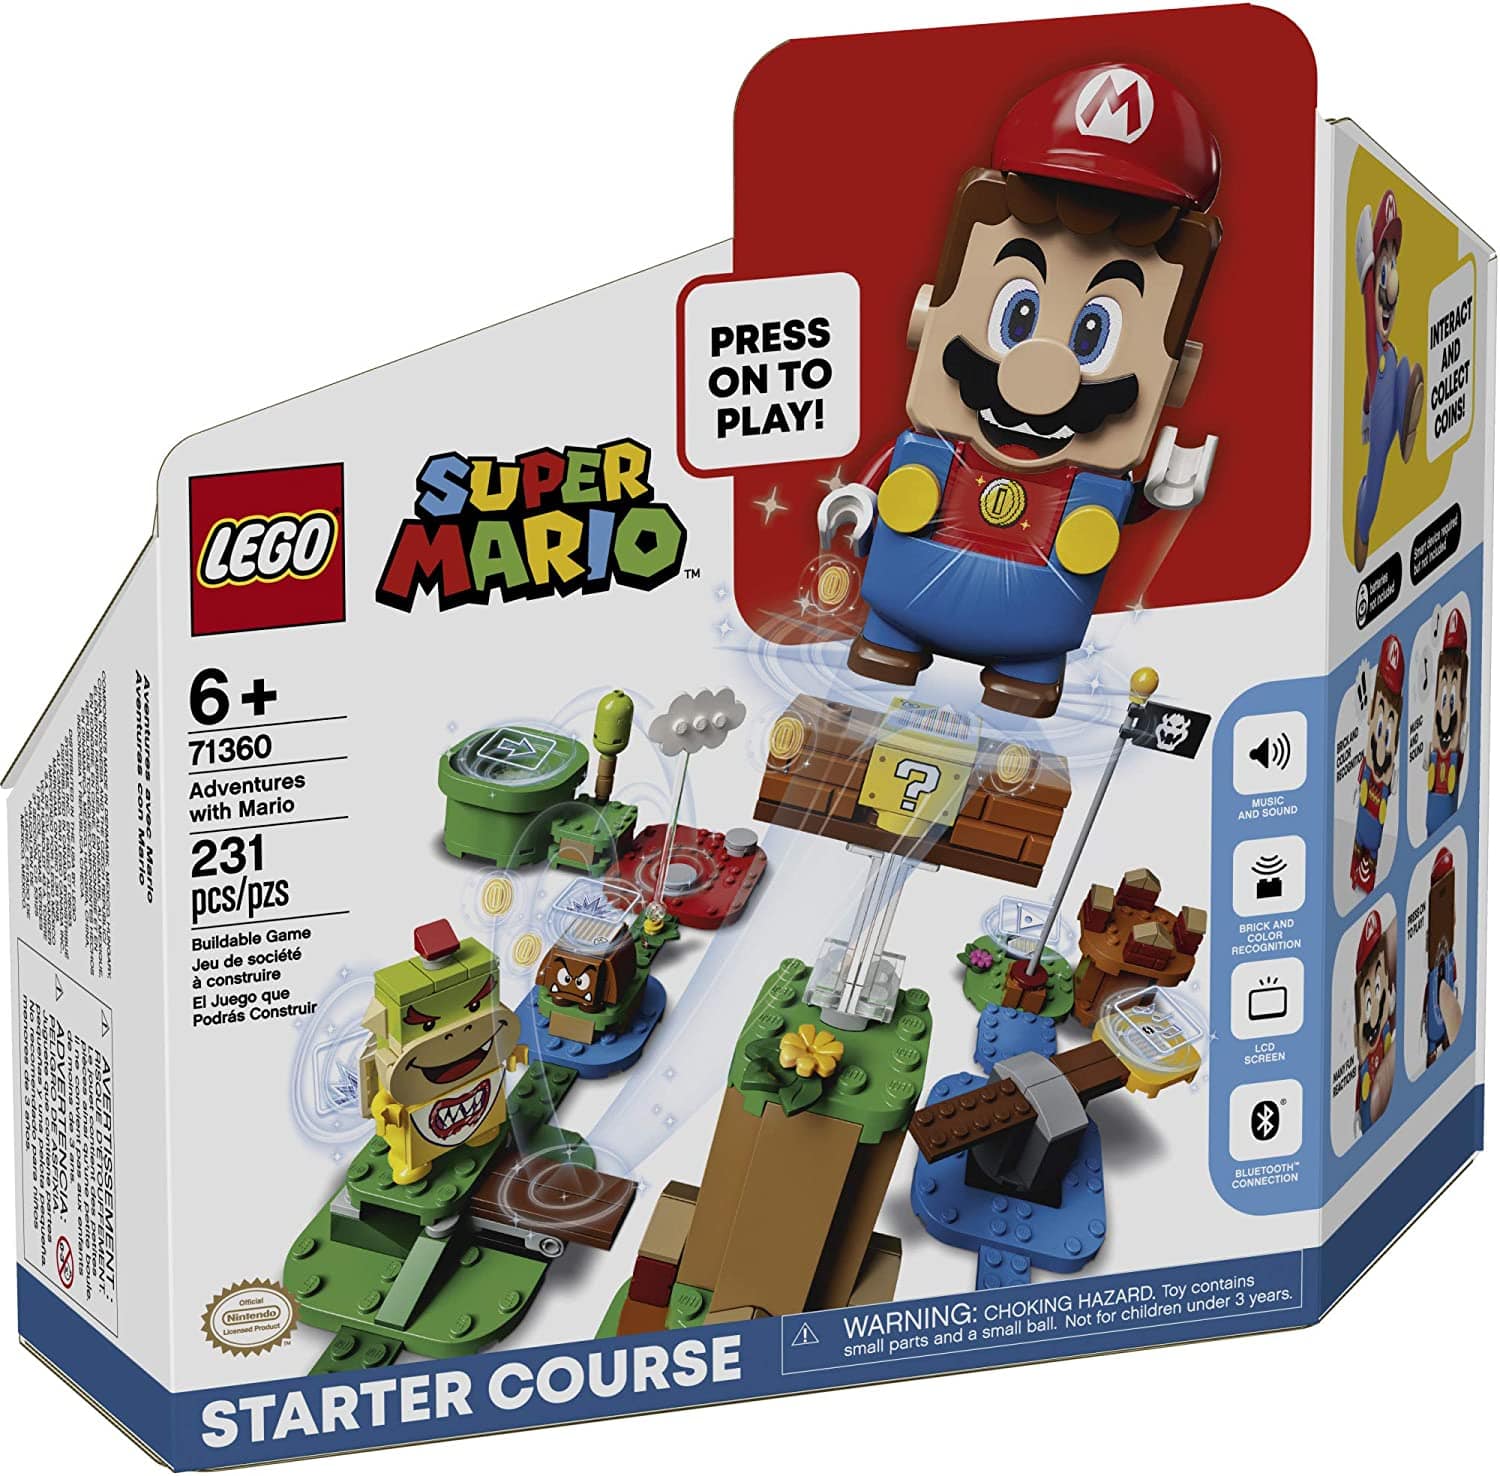 LEGO Super Mario Adventures with Mario Starter Course | 71360 Building Kit